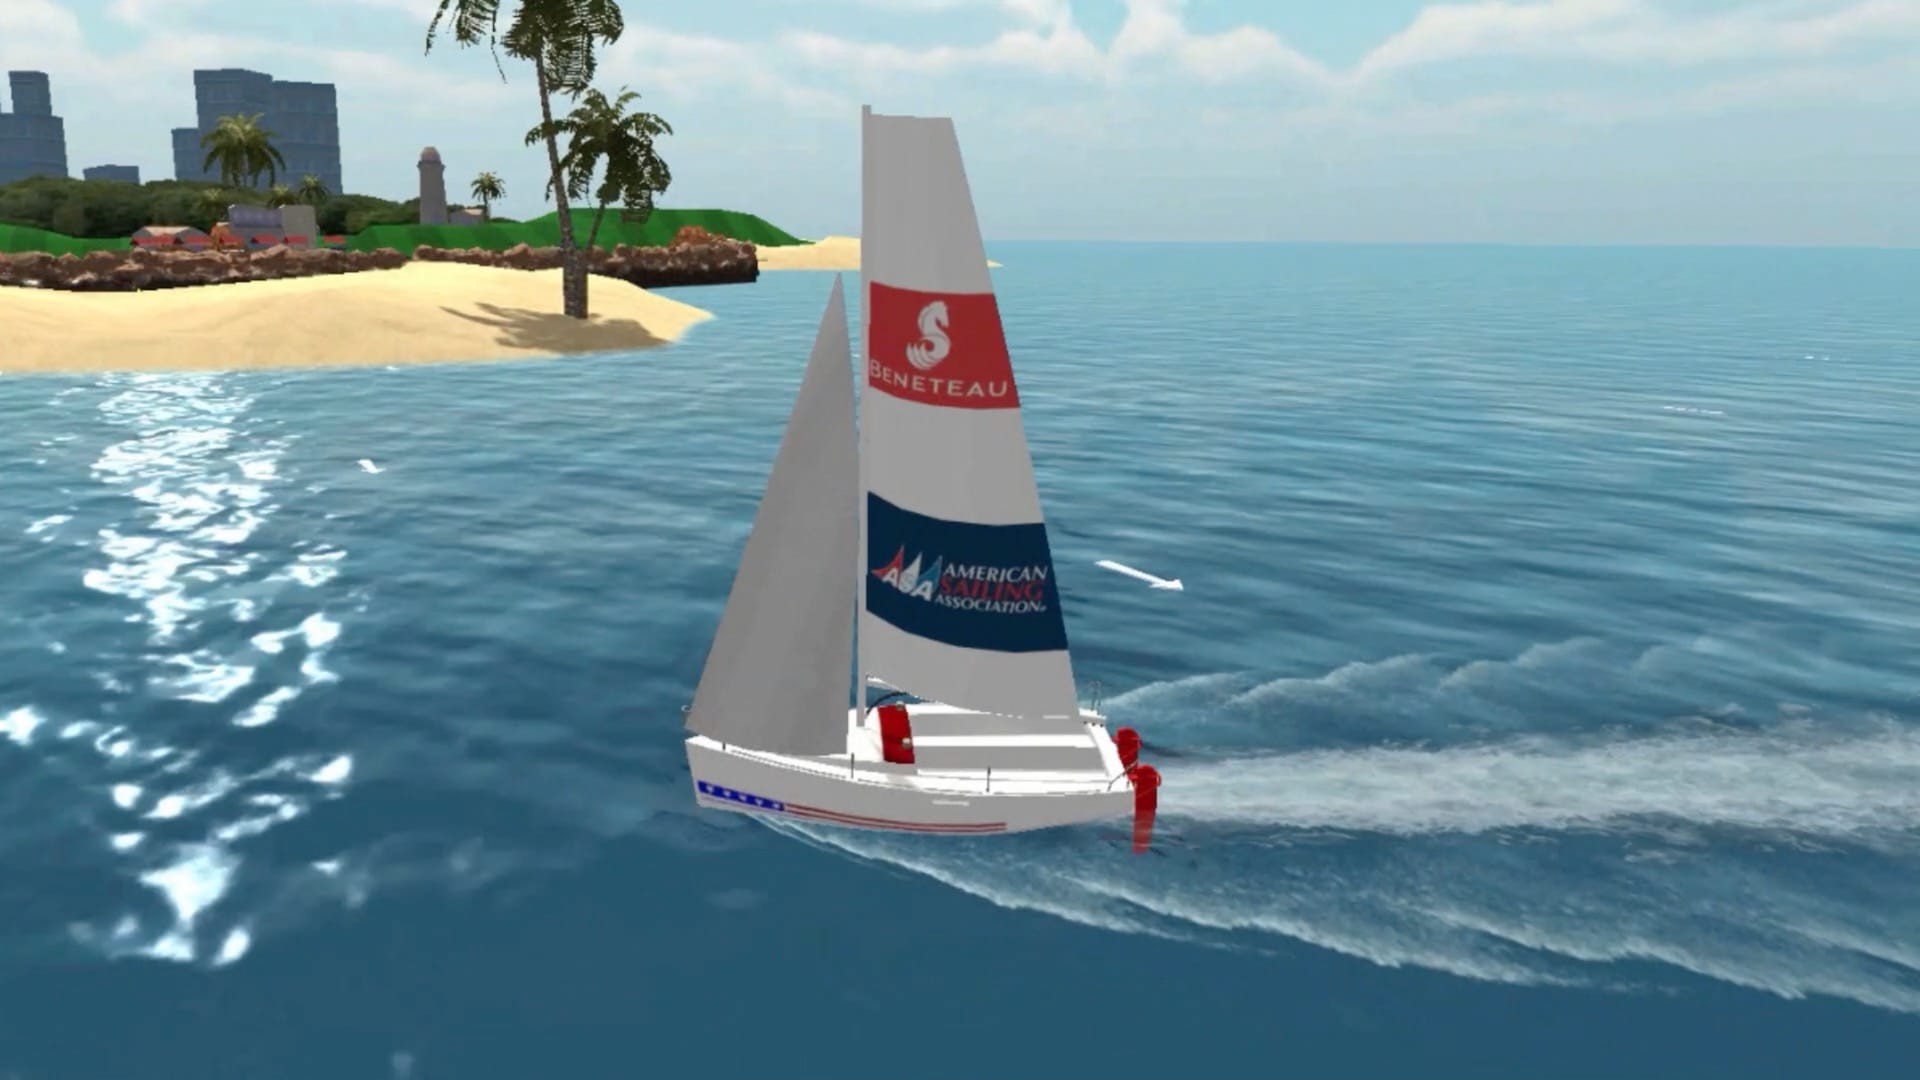 online sailing classes